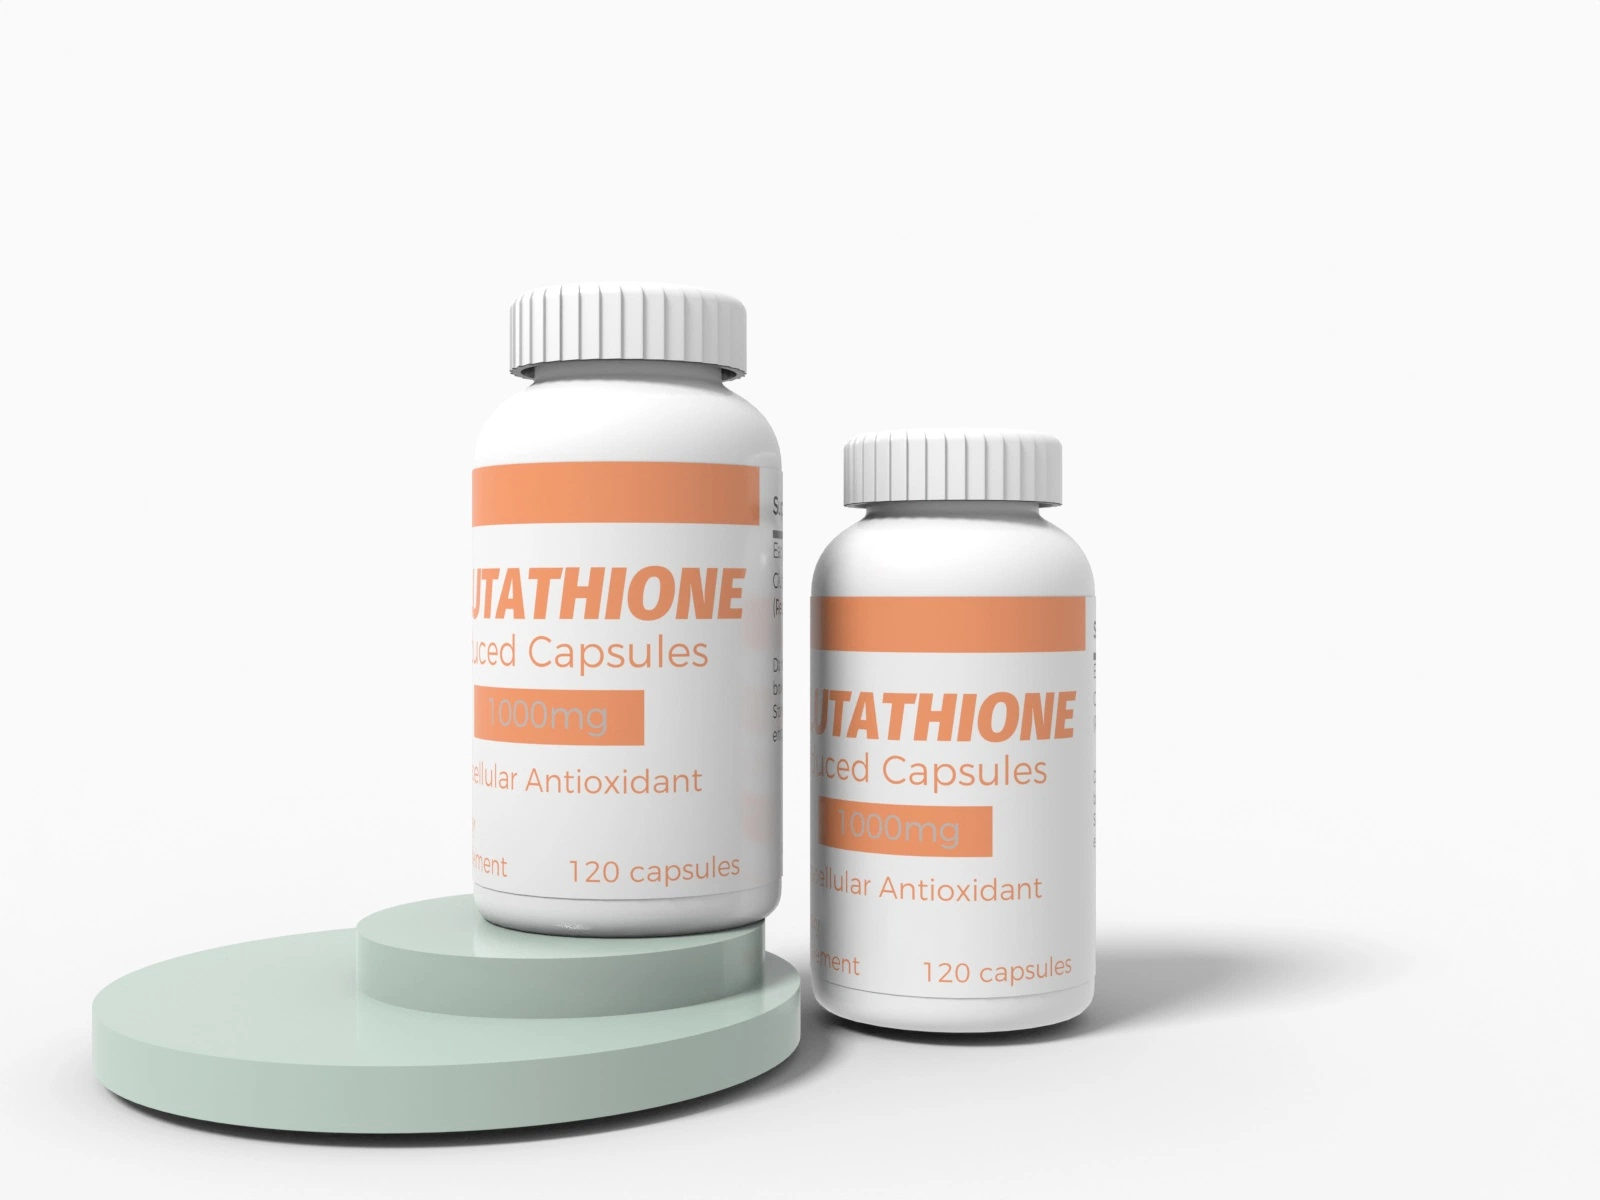 Healthcare Supplement Glutathione 1000mg Kapseln Whitening Skin Care Western Drugs Für Haut OEM Amino Acid Glutathion